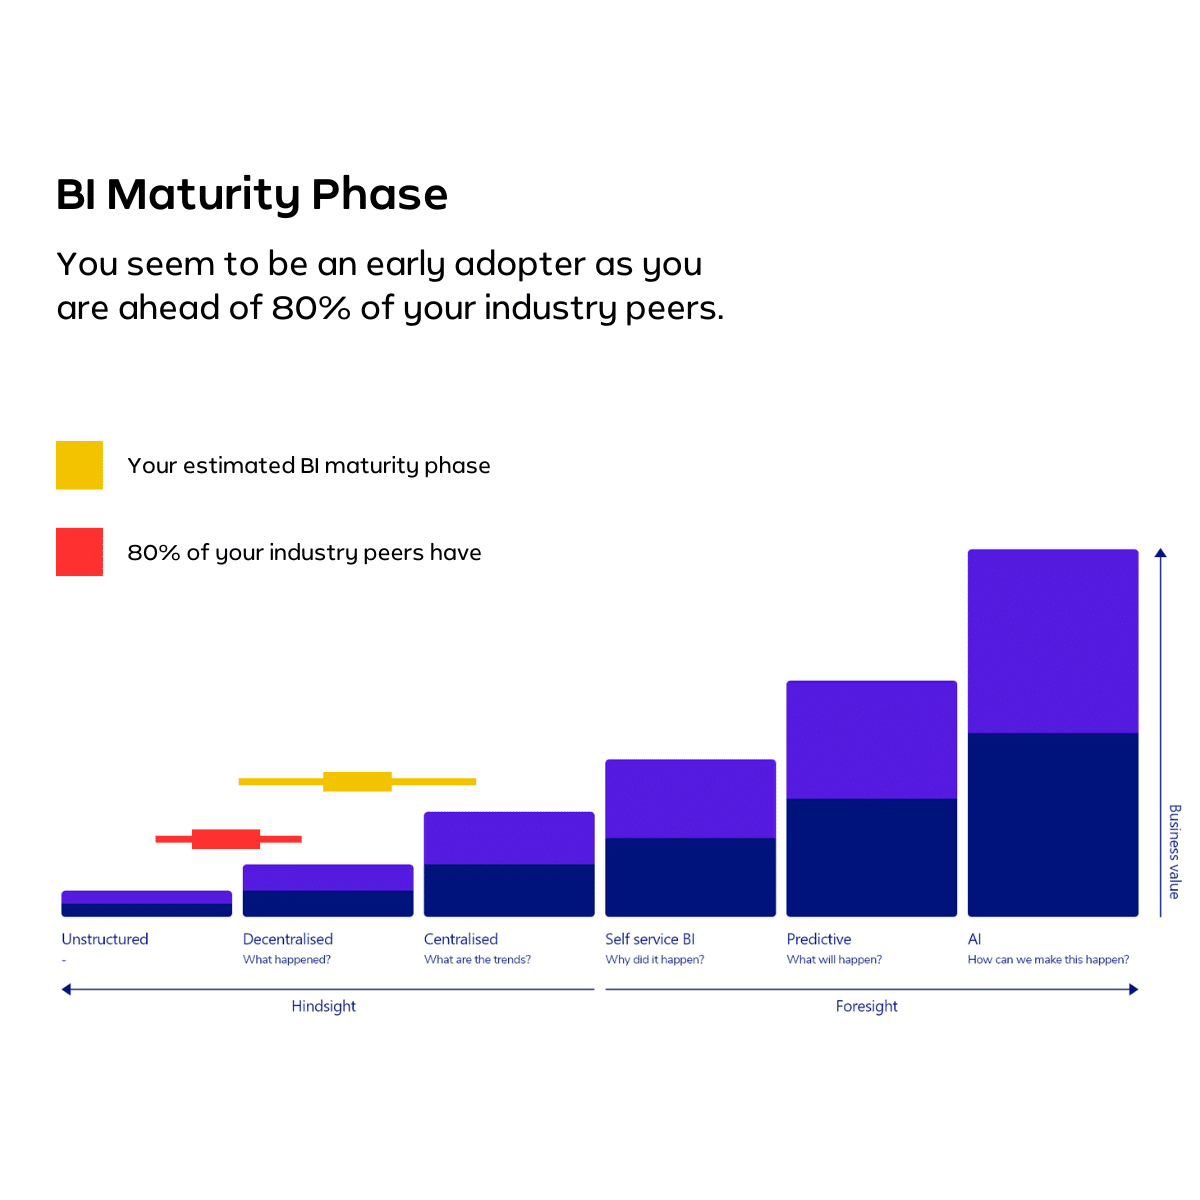 Your estimated BI maturity phase